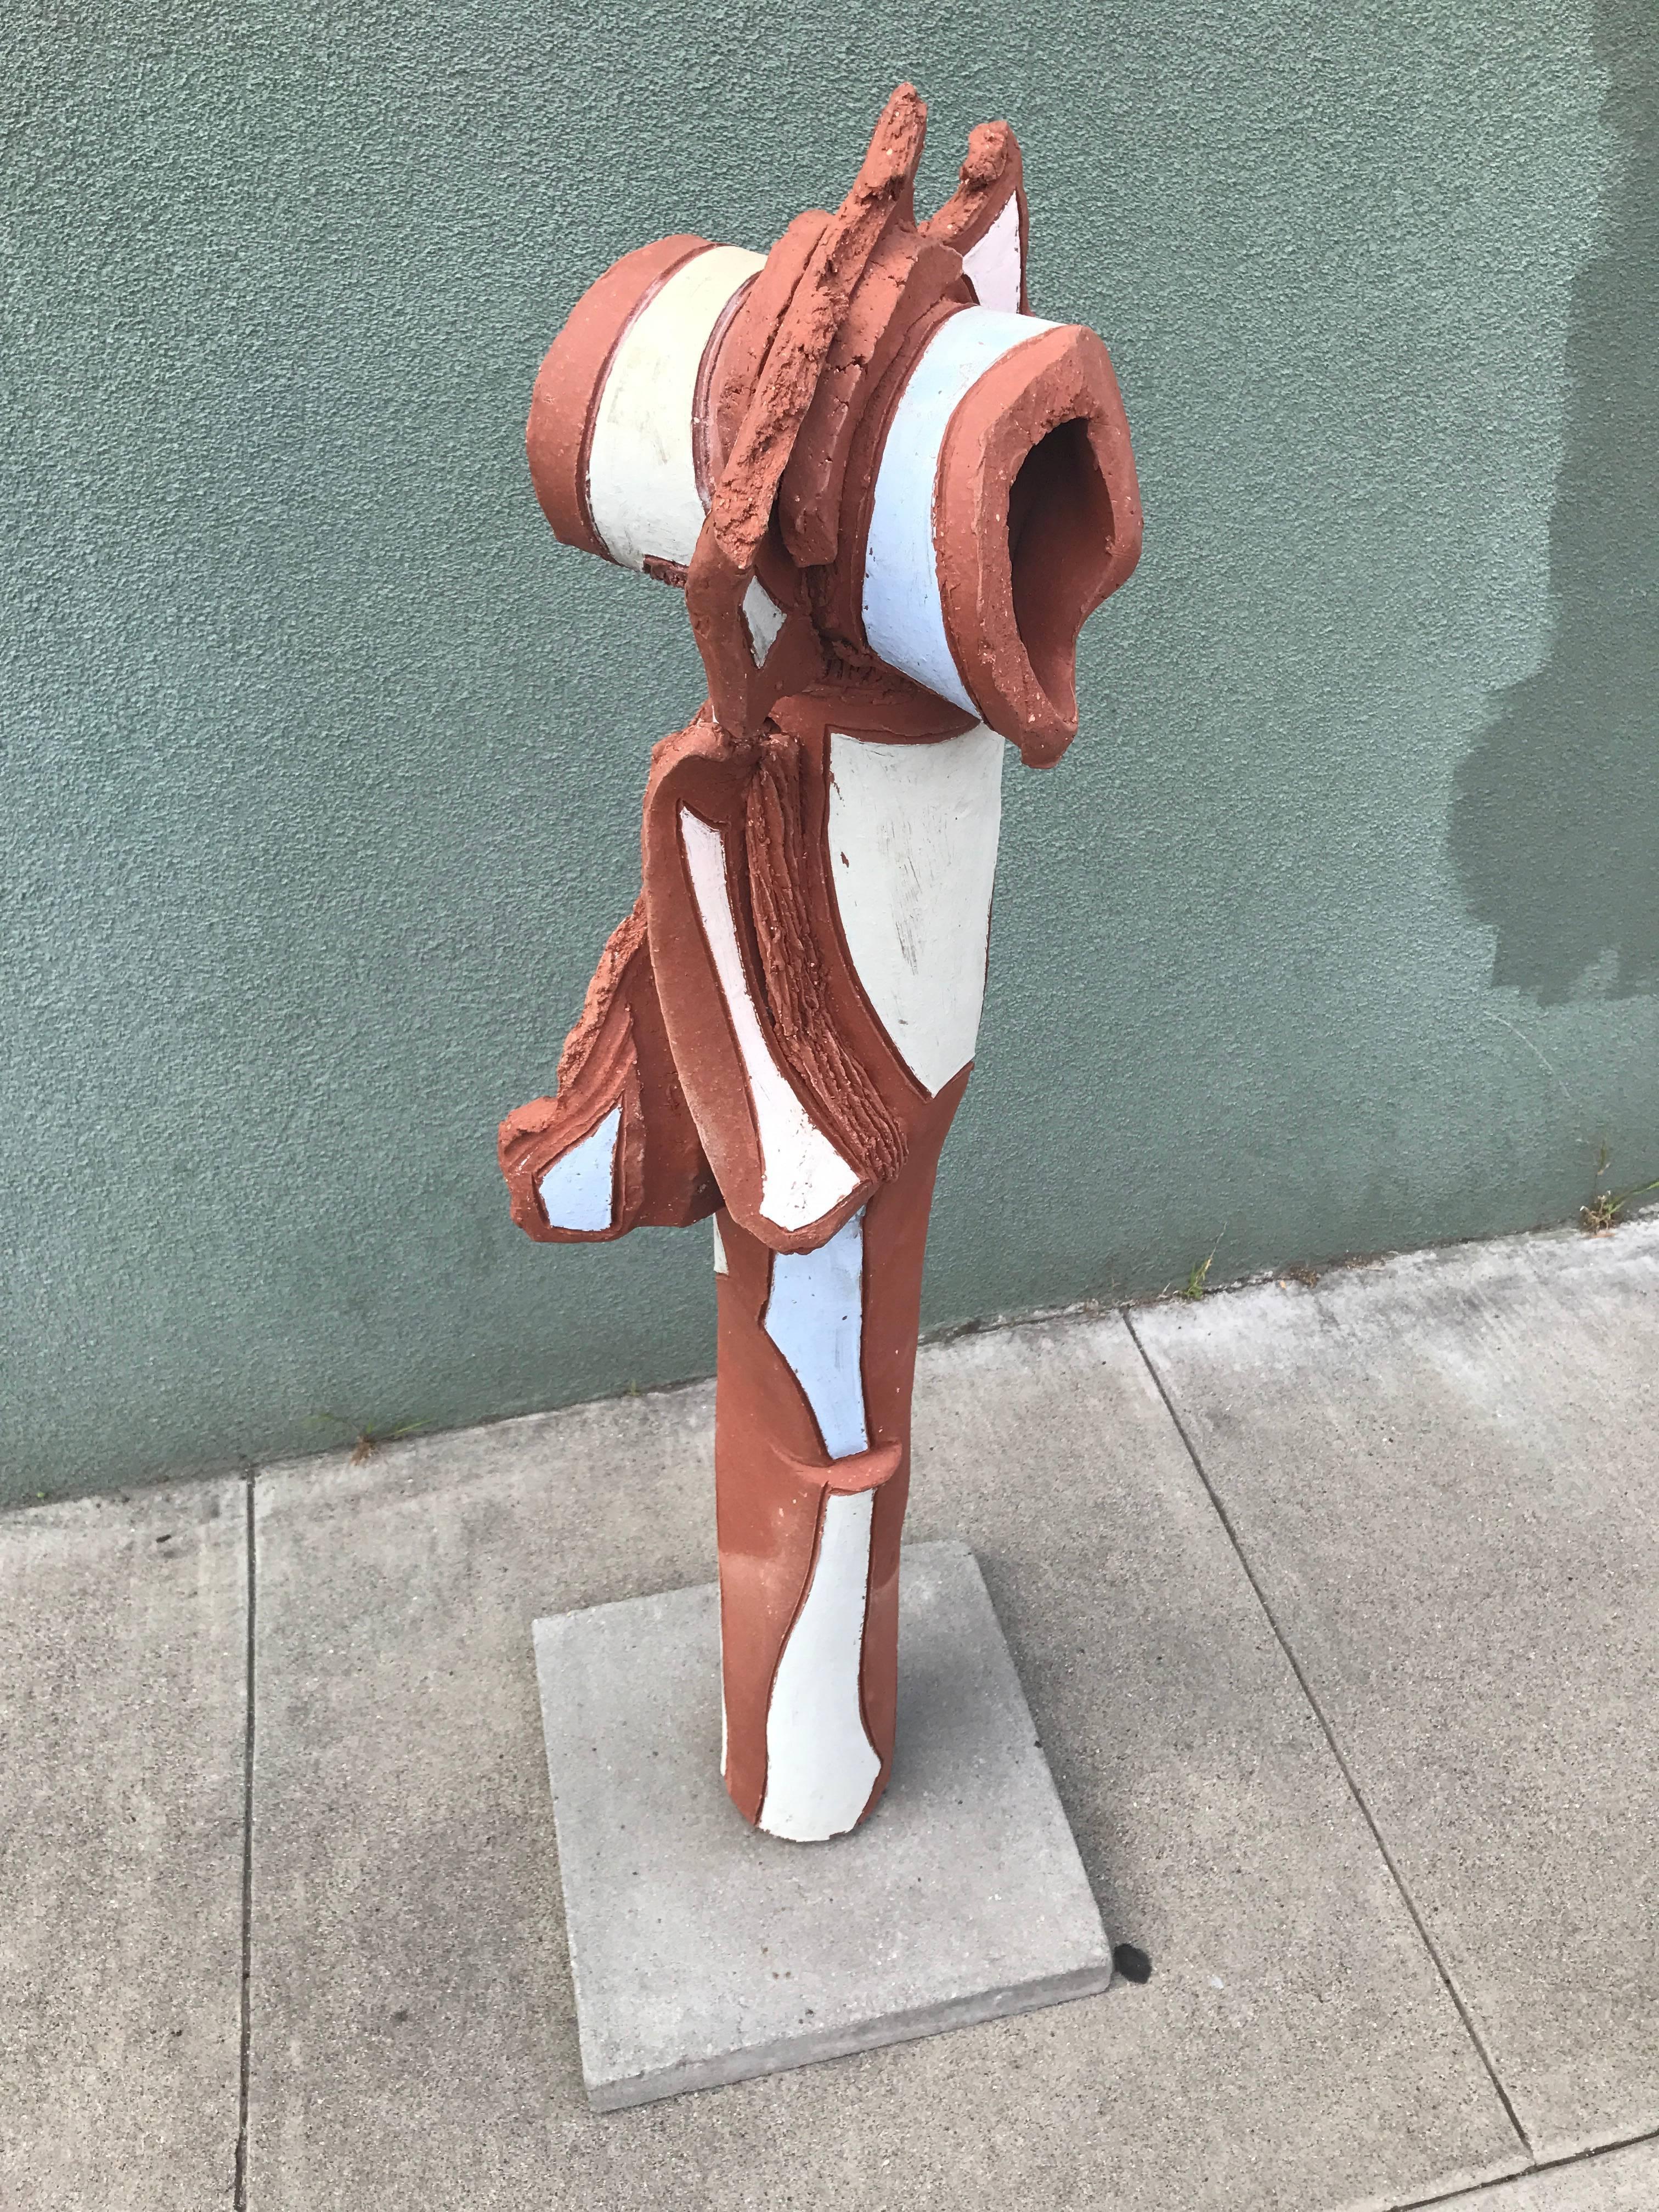 Bay Area Large Glazed Ceramic Abstract or Brutalist TOTEM Sculpture #2 For Sale 2